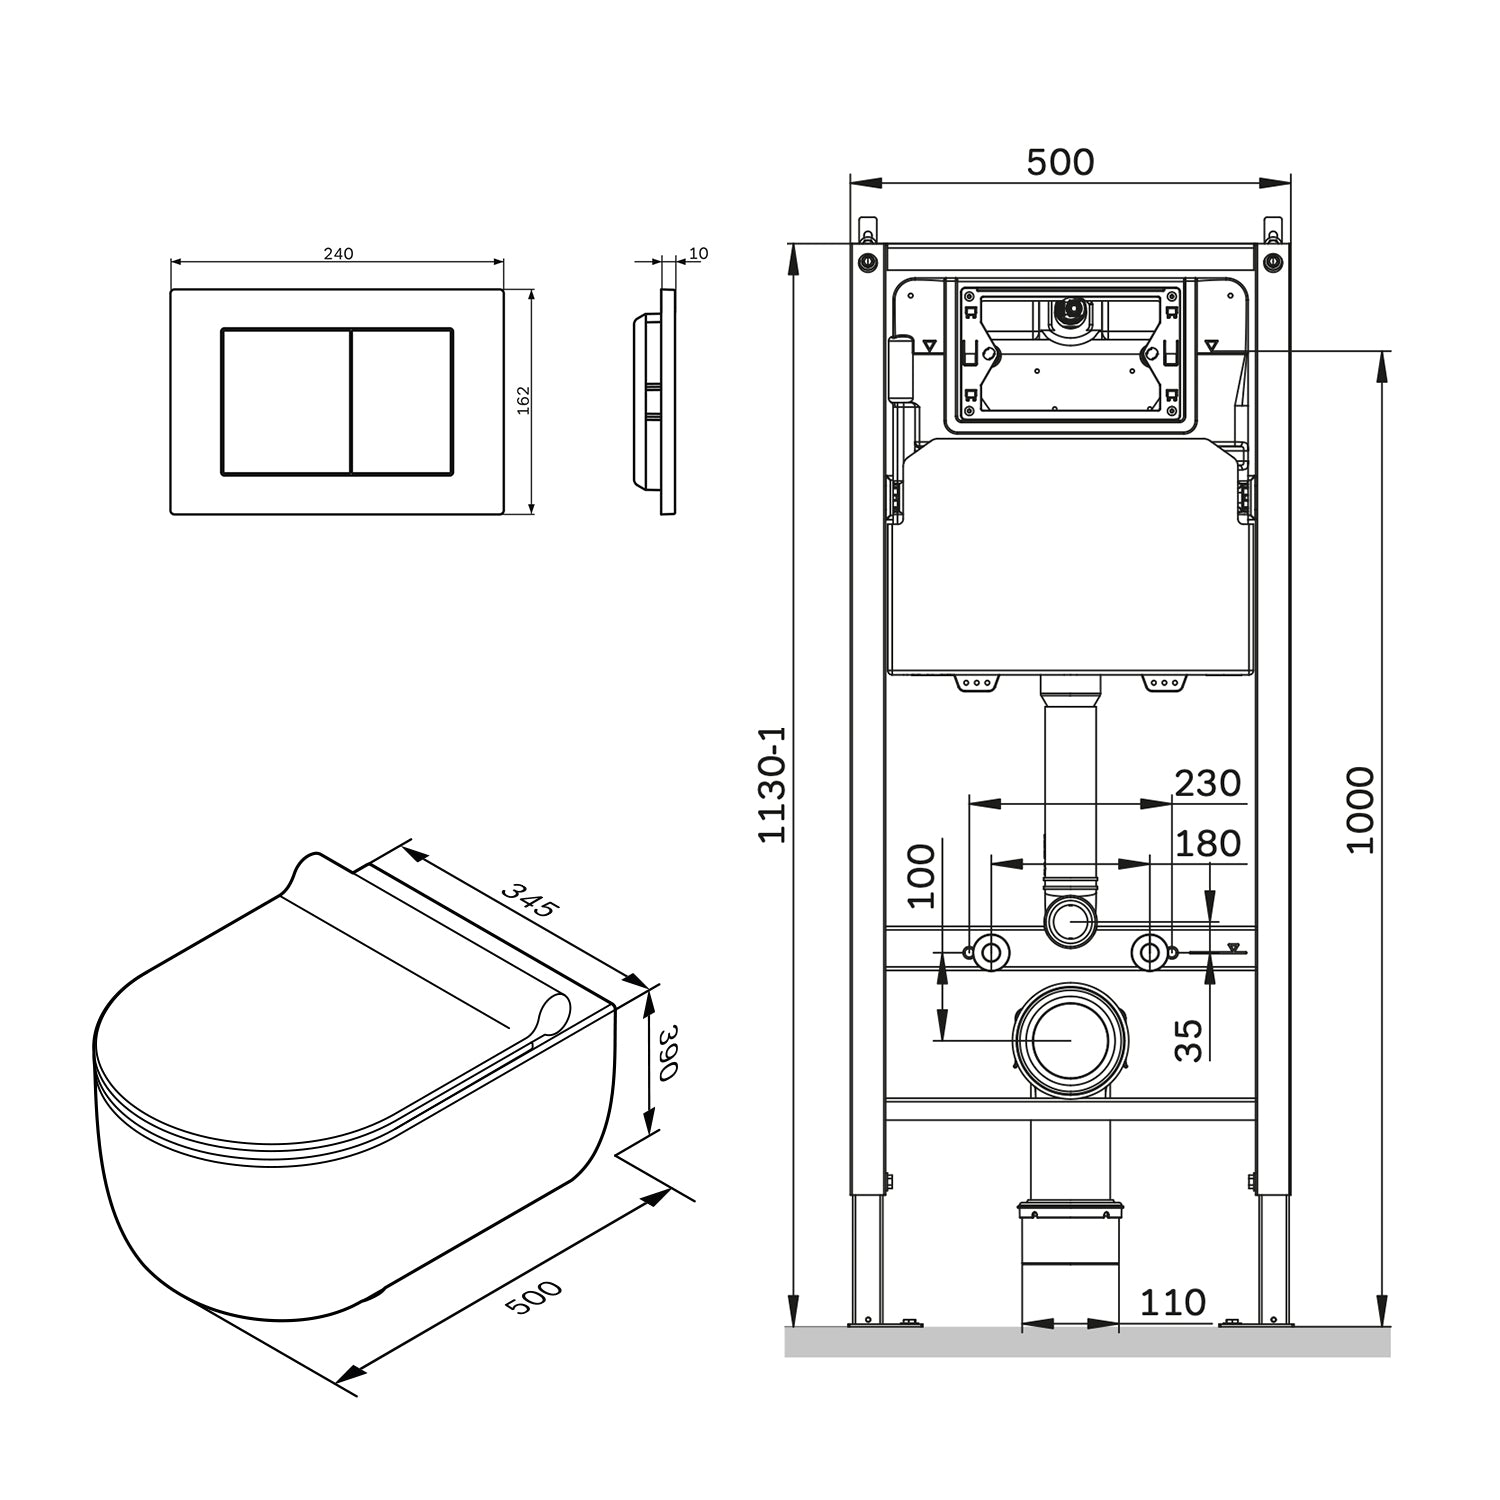 IIS90251.XB1700 Set: Wand-WC + Vorwandelement + Drückerplatte